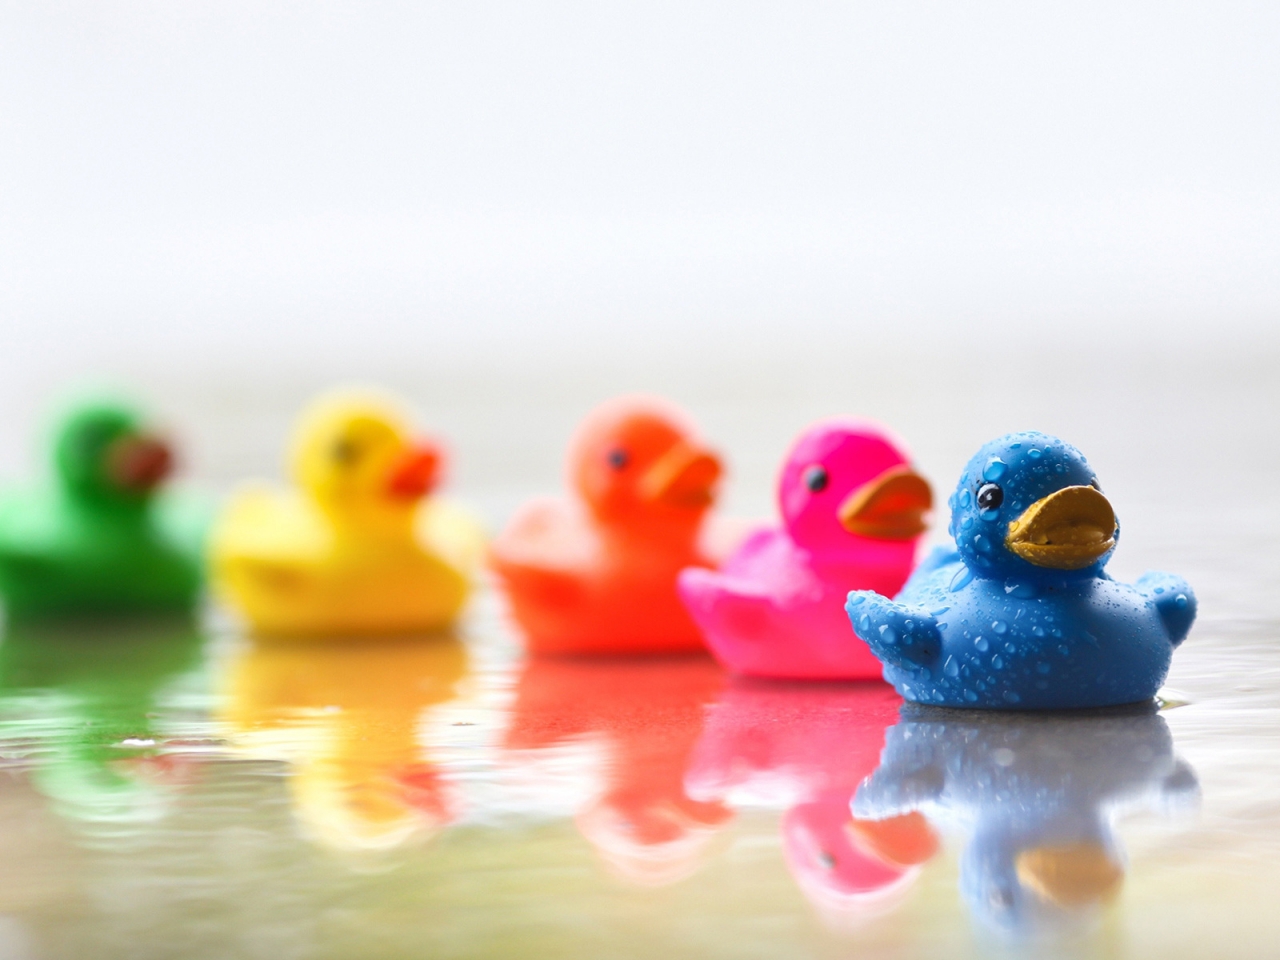 Cute Colourful Rubber Ducks for 1280 x 960 resolution